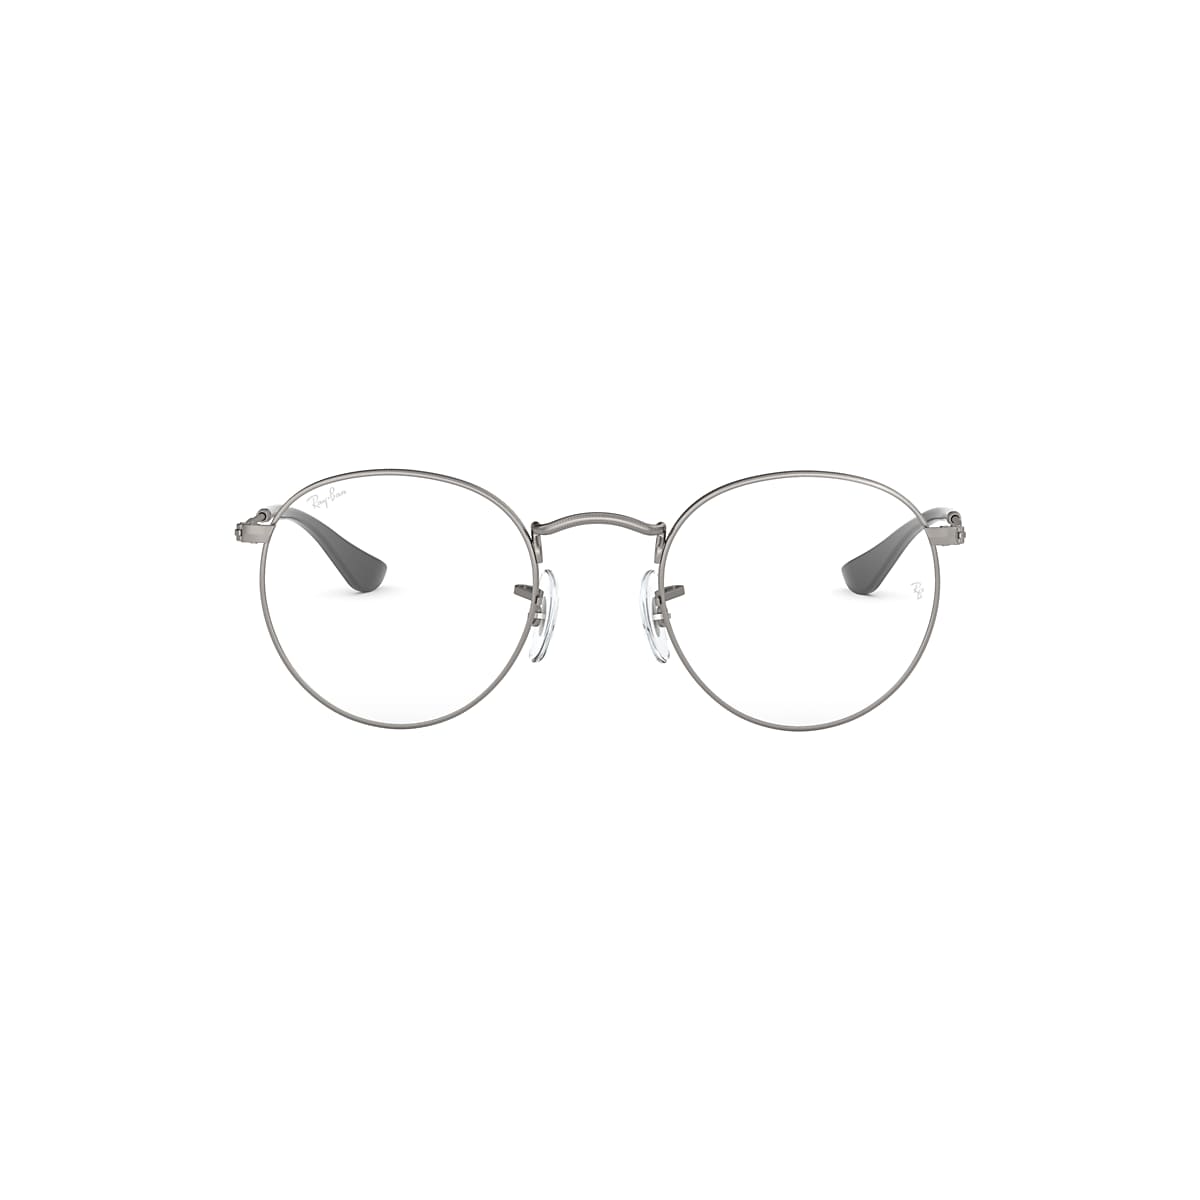 Ray-Ban 0RX3447V Glasses in Silver/gunmetal/grey | Target Optical